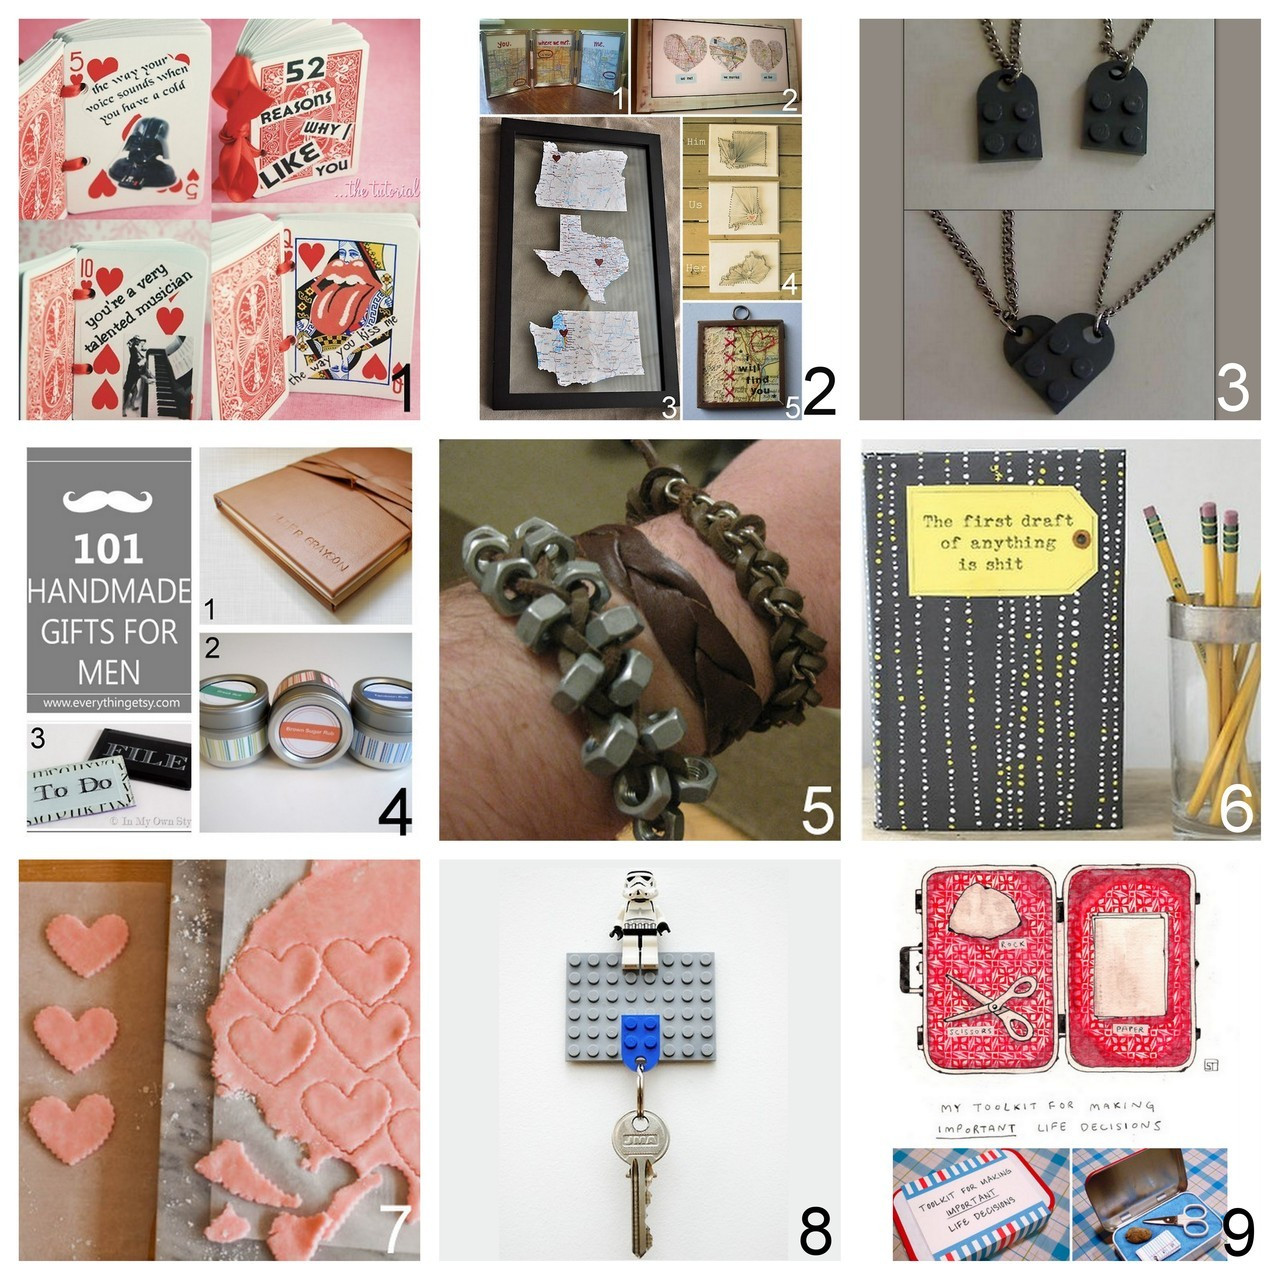 Best ideas about Cute Boyfriend Gift Ideas
. Save or Pin Gift Ideas for Boyfriend Cute Birthday Gift Ideas For A Now.